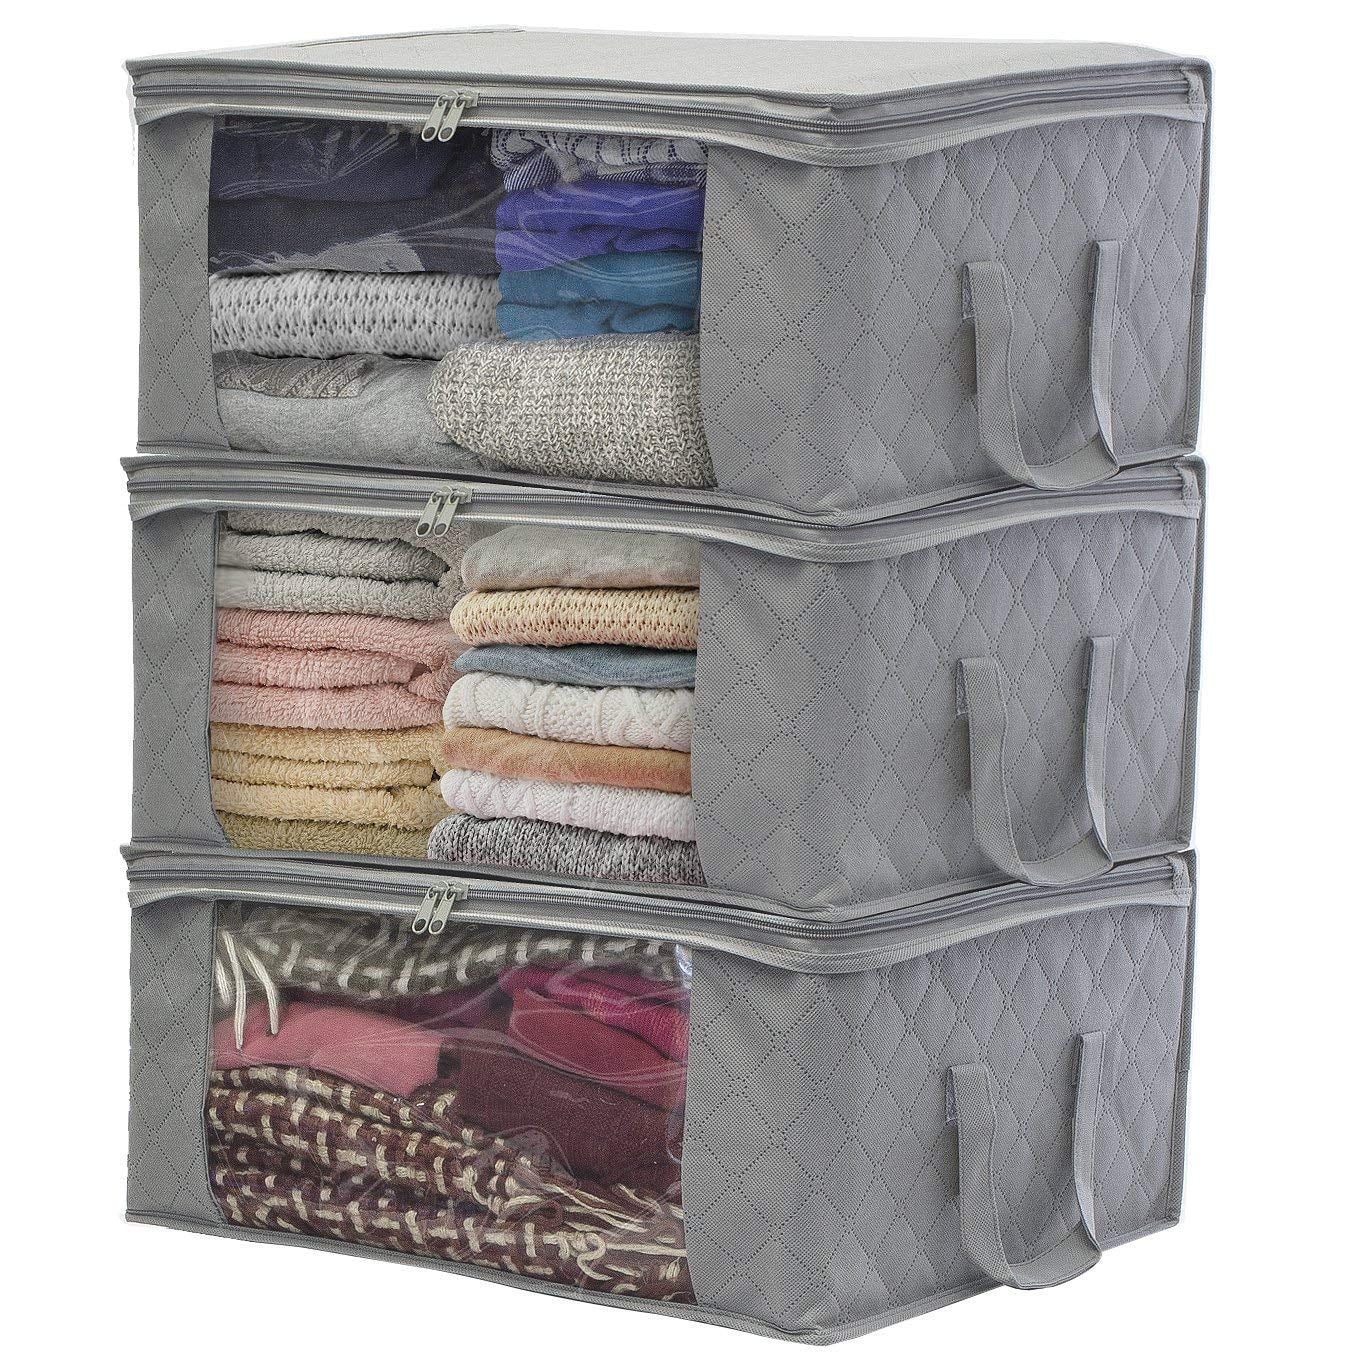 33 Practical Bag Storage Ideas - Shelterness  Bedroom closet storage,  Handbag storage, Apartment closet organization